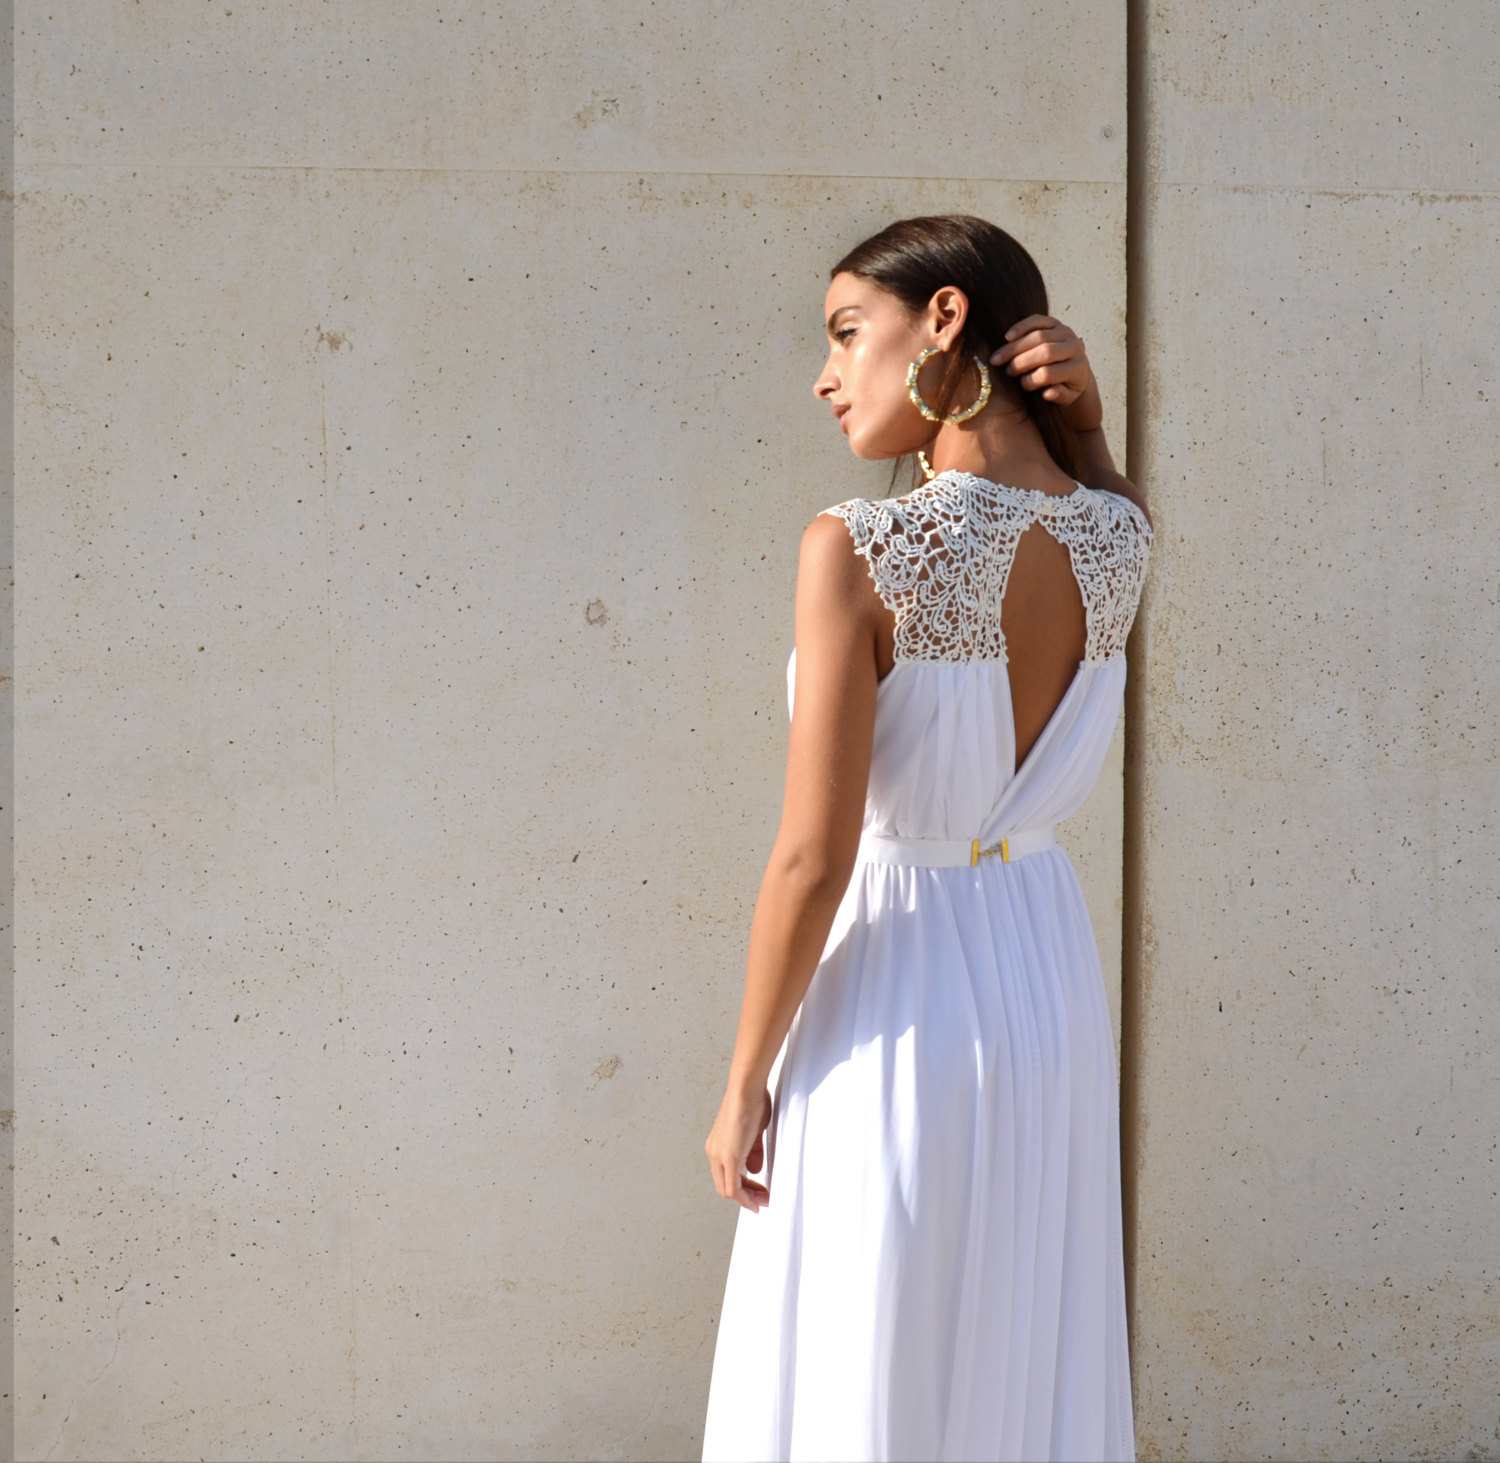 embroidered dress top | dresses boho weddings https://emmalinebride.com/bridal-gowns/dresses-boho-weddings/